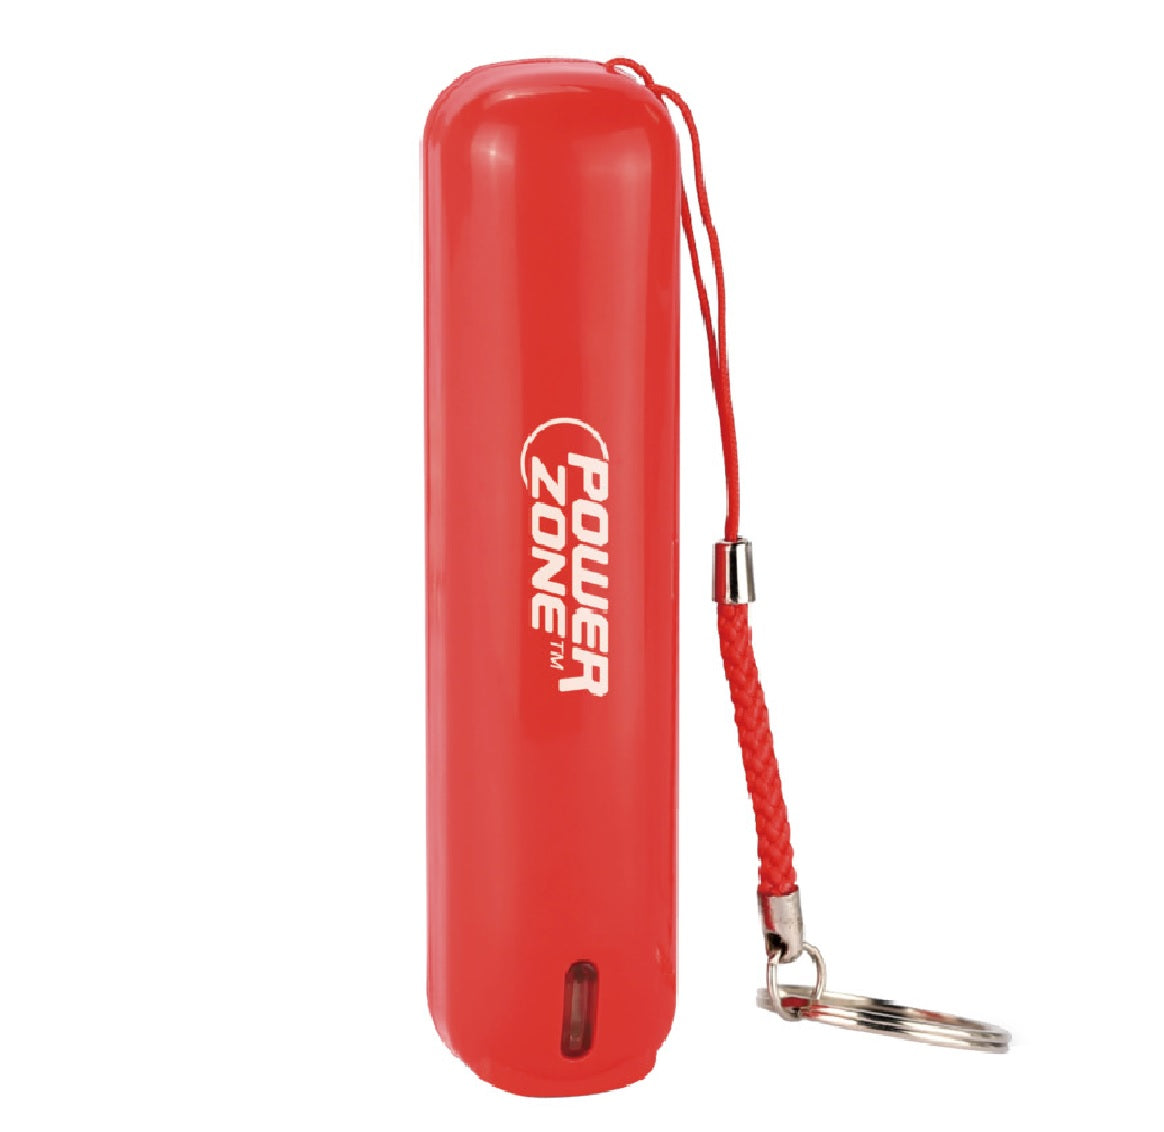 PowerZone S16 Portable Power Bank, 2400 mAh Capacity